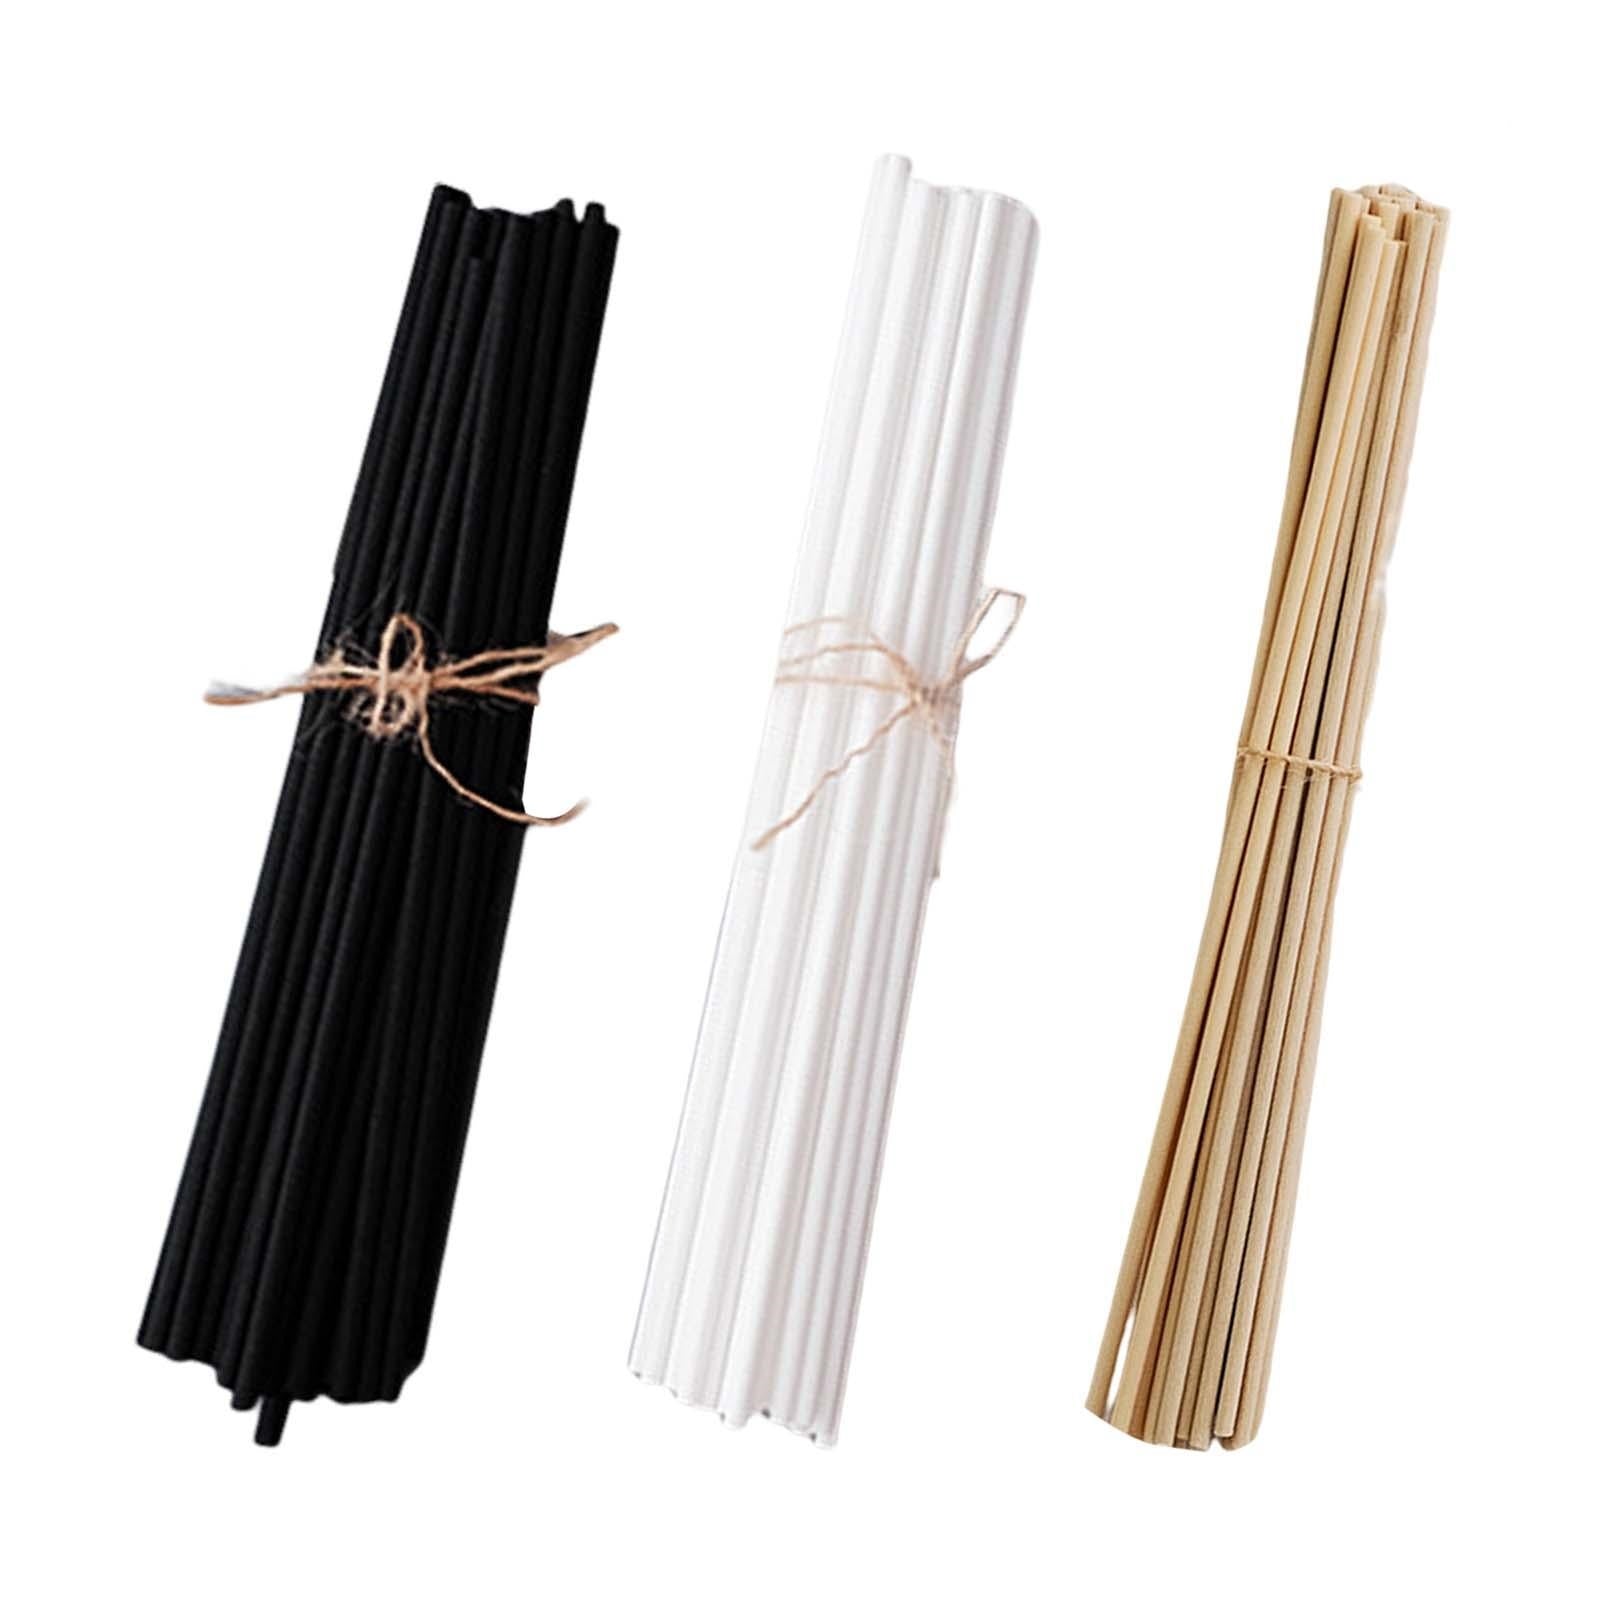 fiber reed diffuser sticks